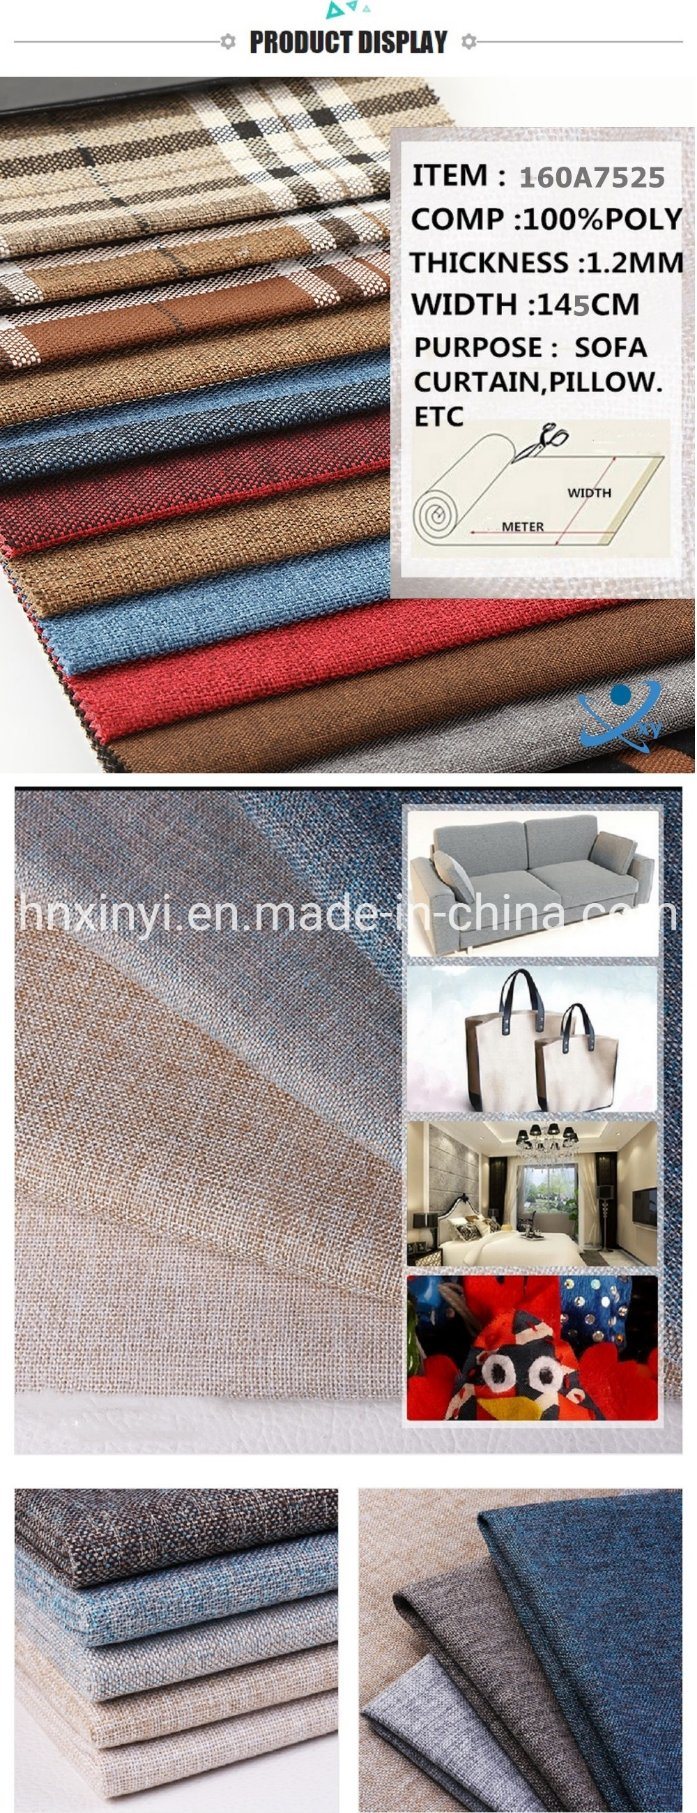 2021 Wholesale Striped Cotton Linen Fabric Clothing Cotton Linen Shirt Sheet Fabric